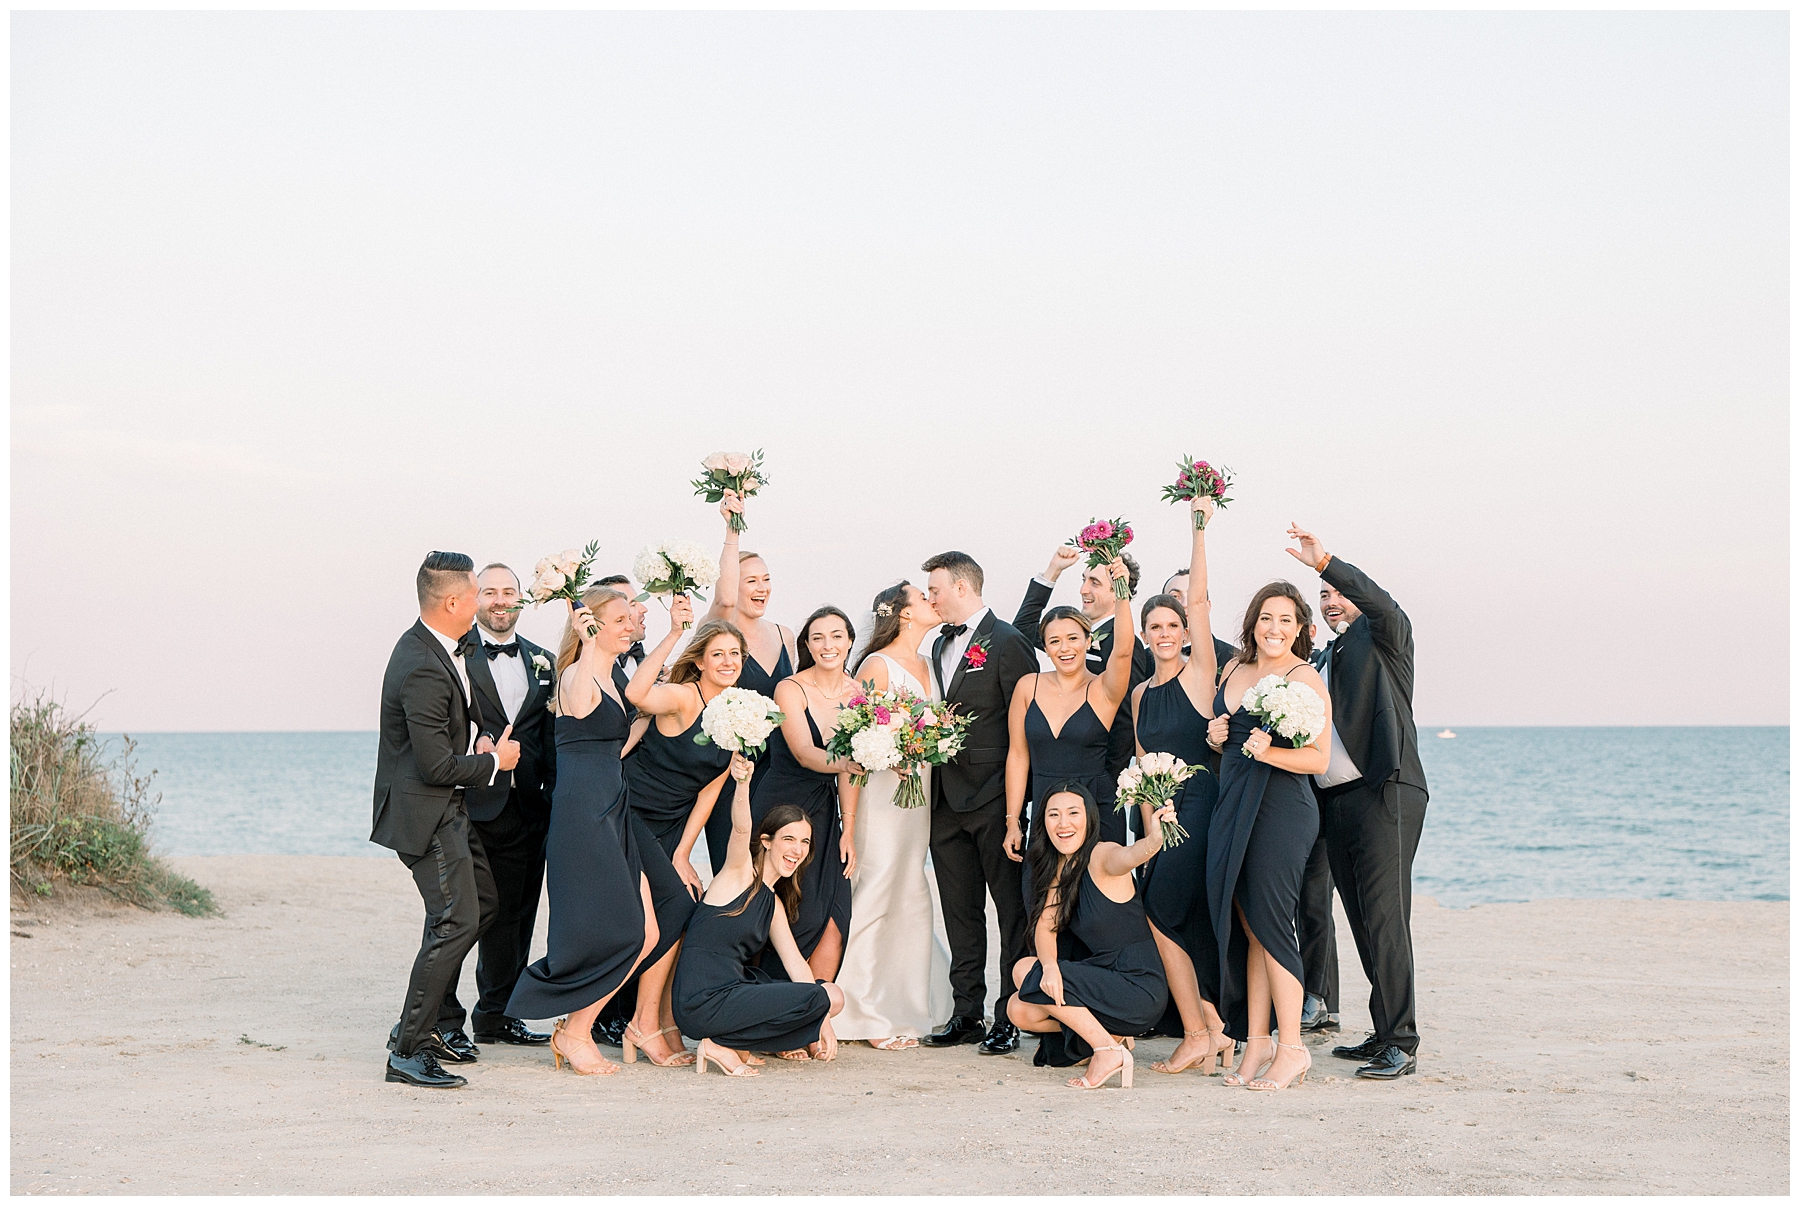 Bridal party gathers around bride nad groom on Cape cod beach